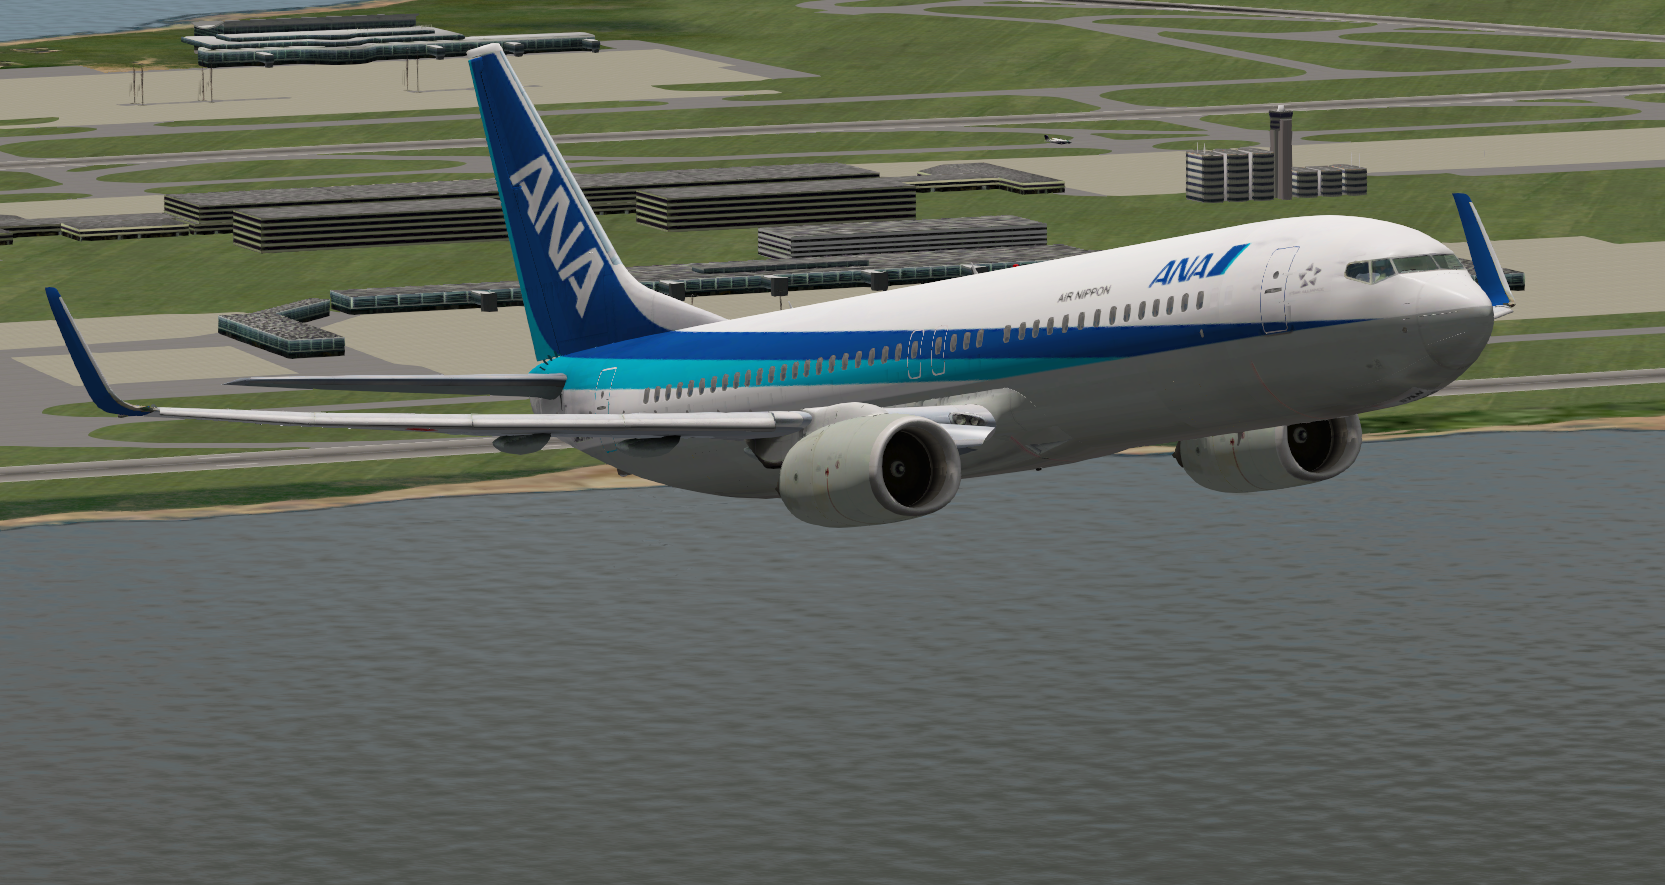 737-800 Takeoff